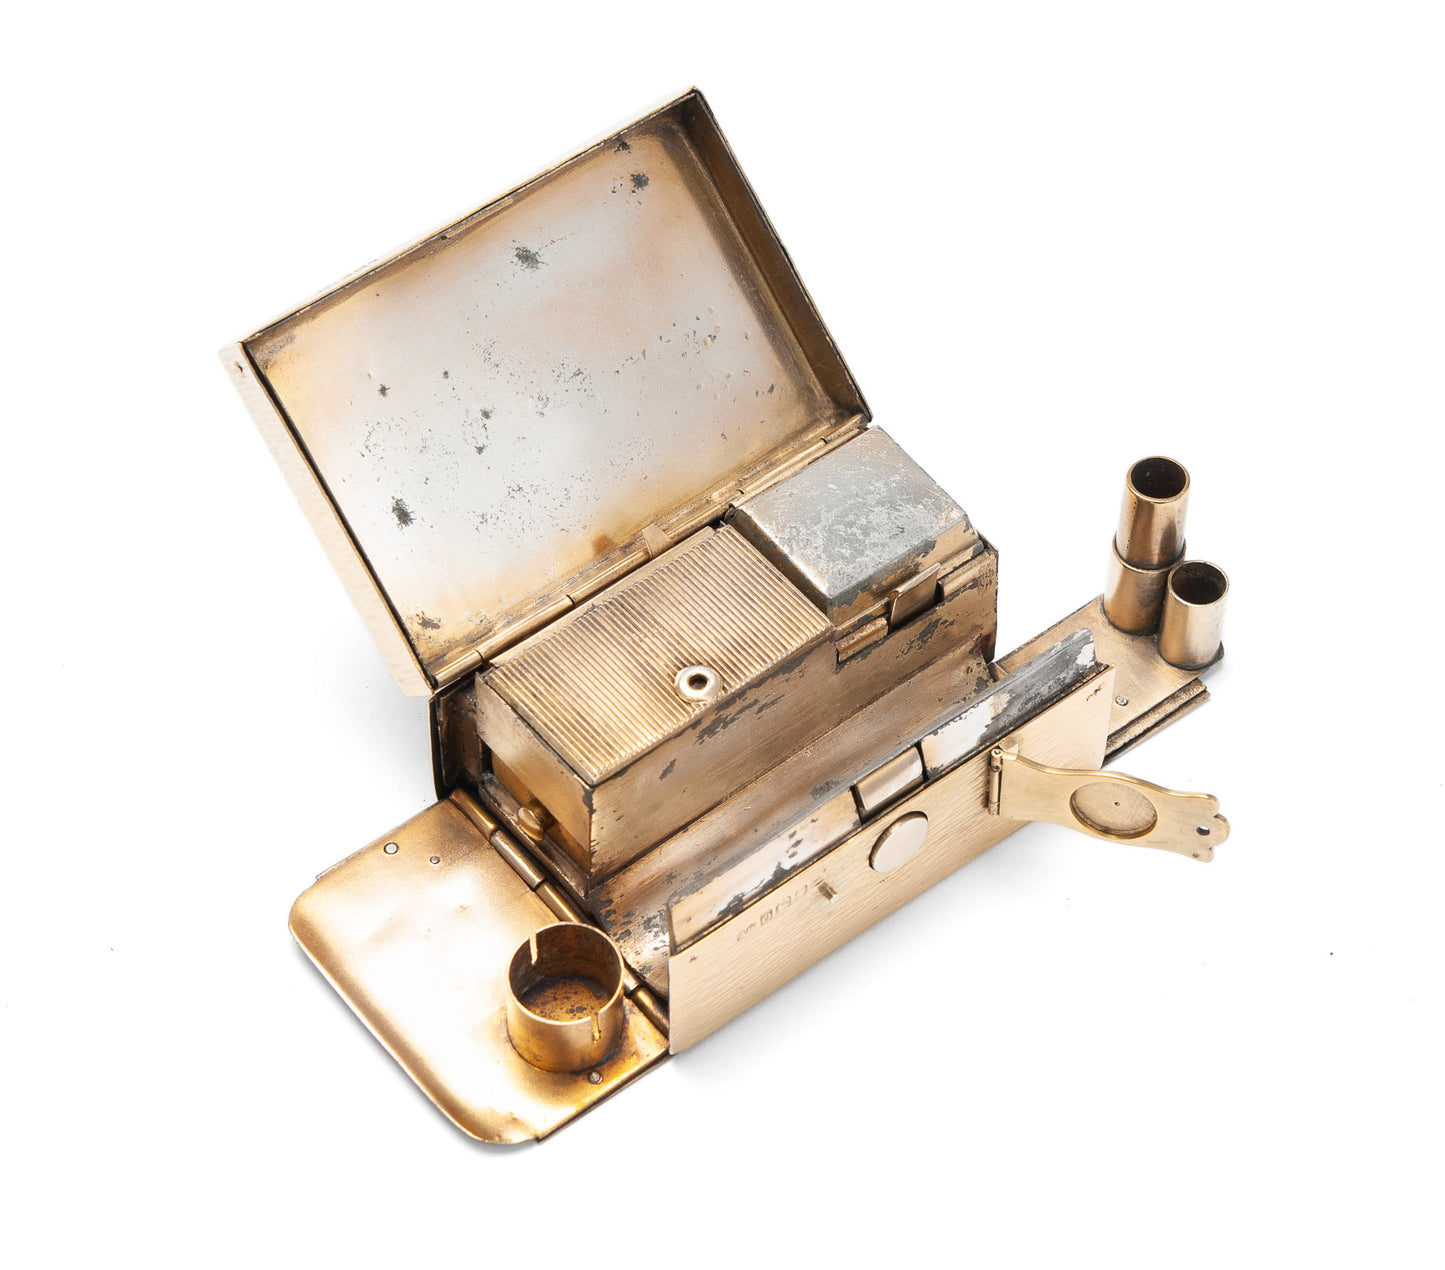 Antique Edwardian Sterling Silver Gilt Cased Travelling Desk Compendium/Inkwell (Code 9927)